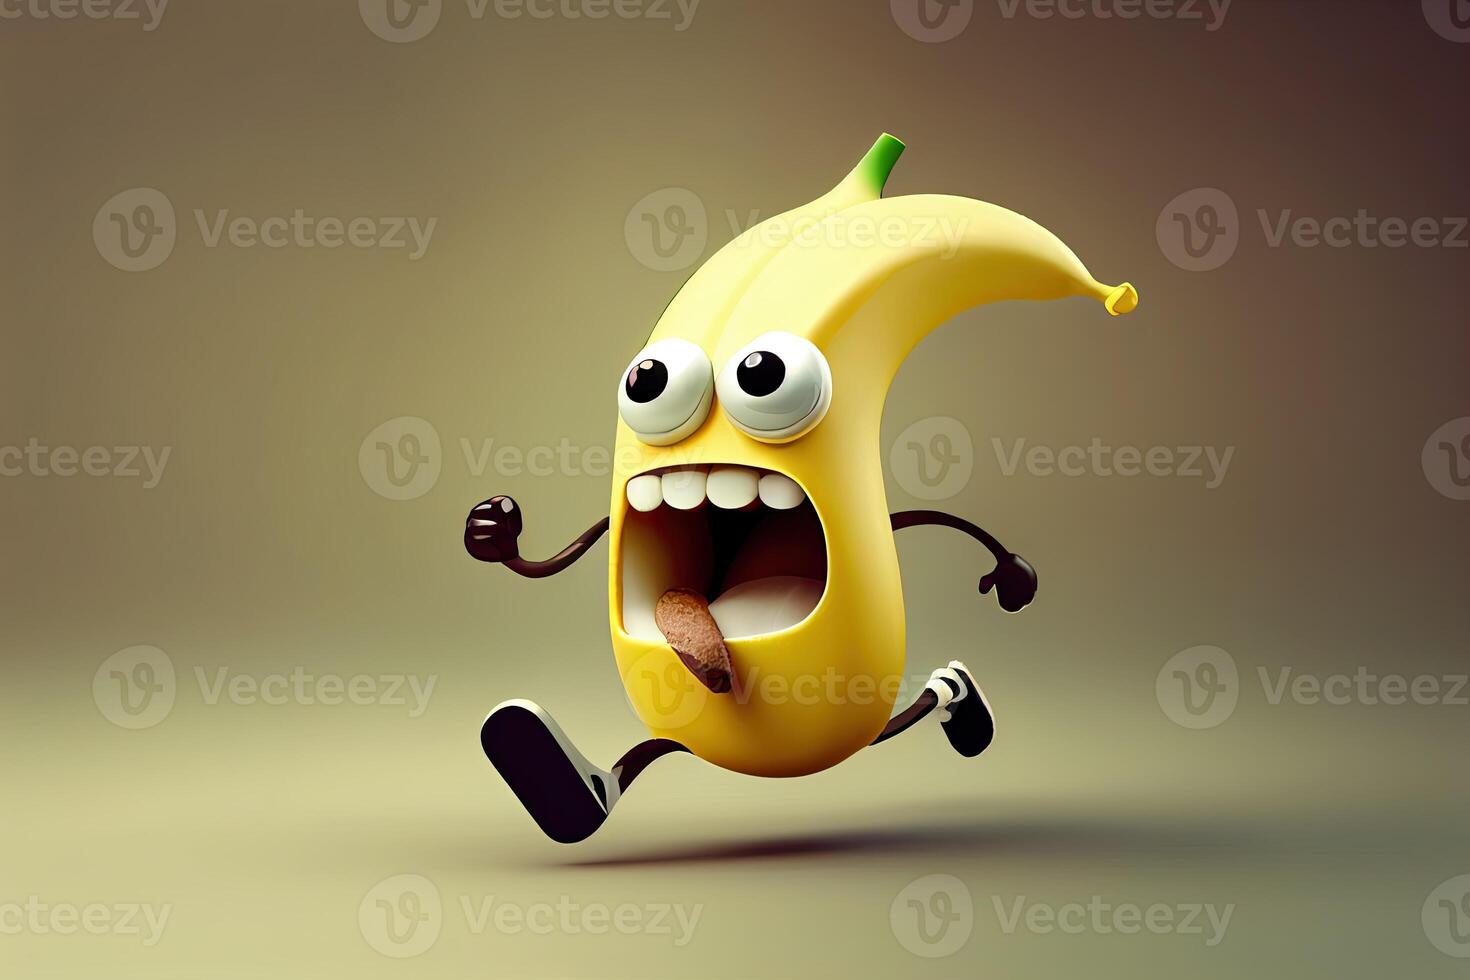 Funny cute banana character design, photo